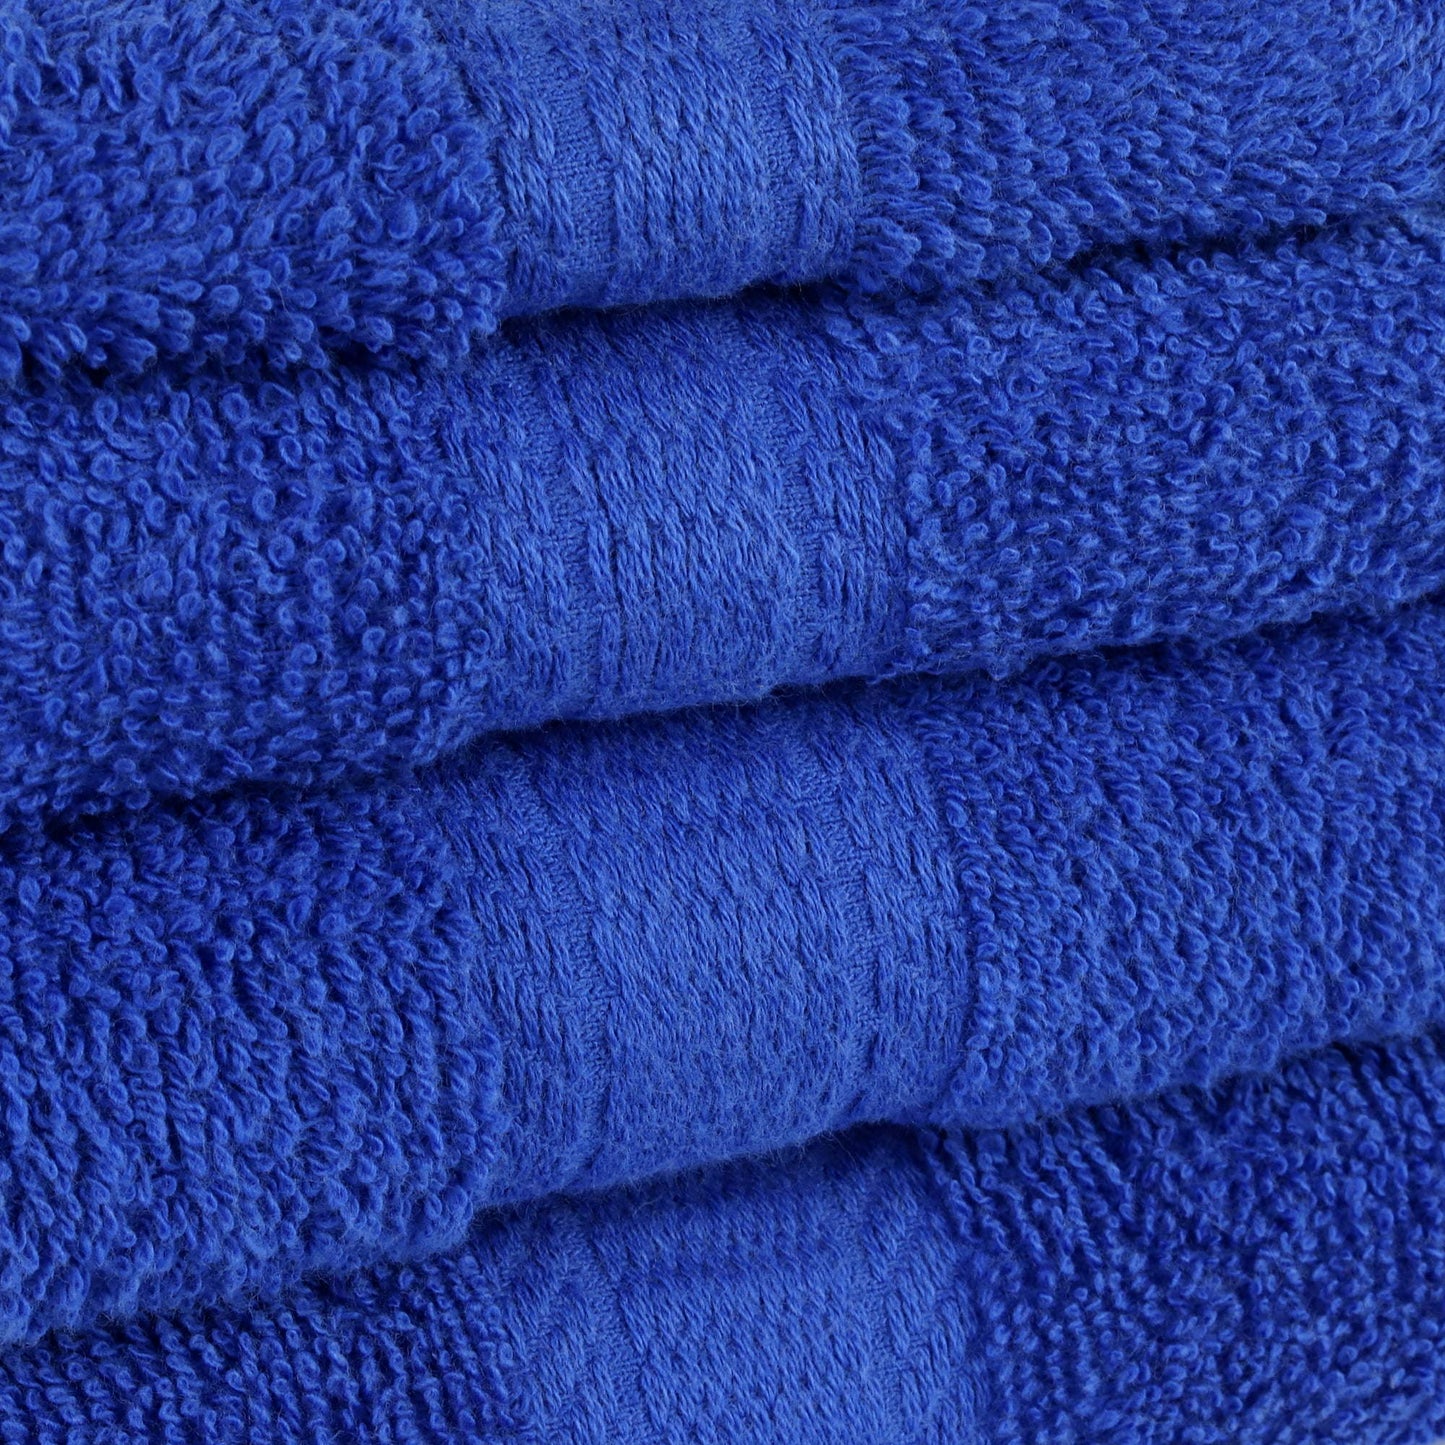 Basic Solid 18-Piece Bath Towel Set Collection